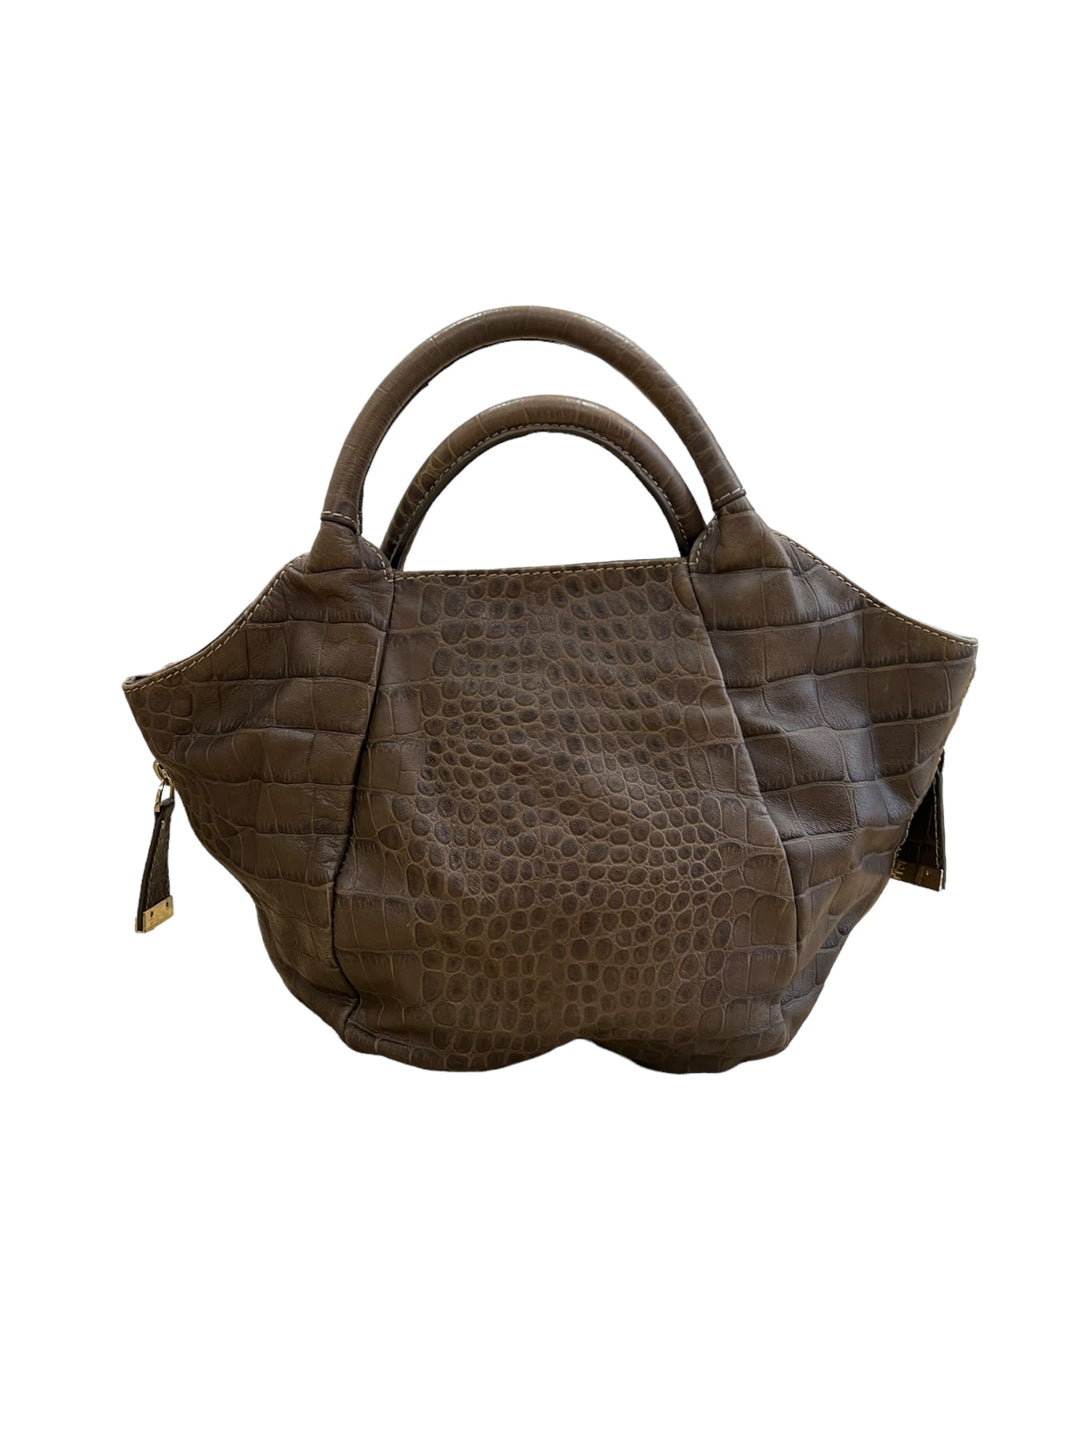 Gianfranco Ferre Vintage Leather handbag